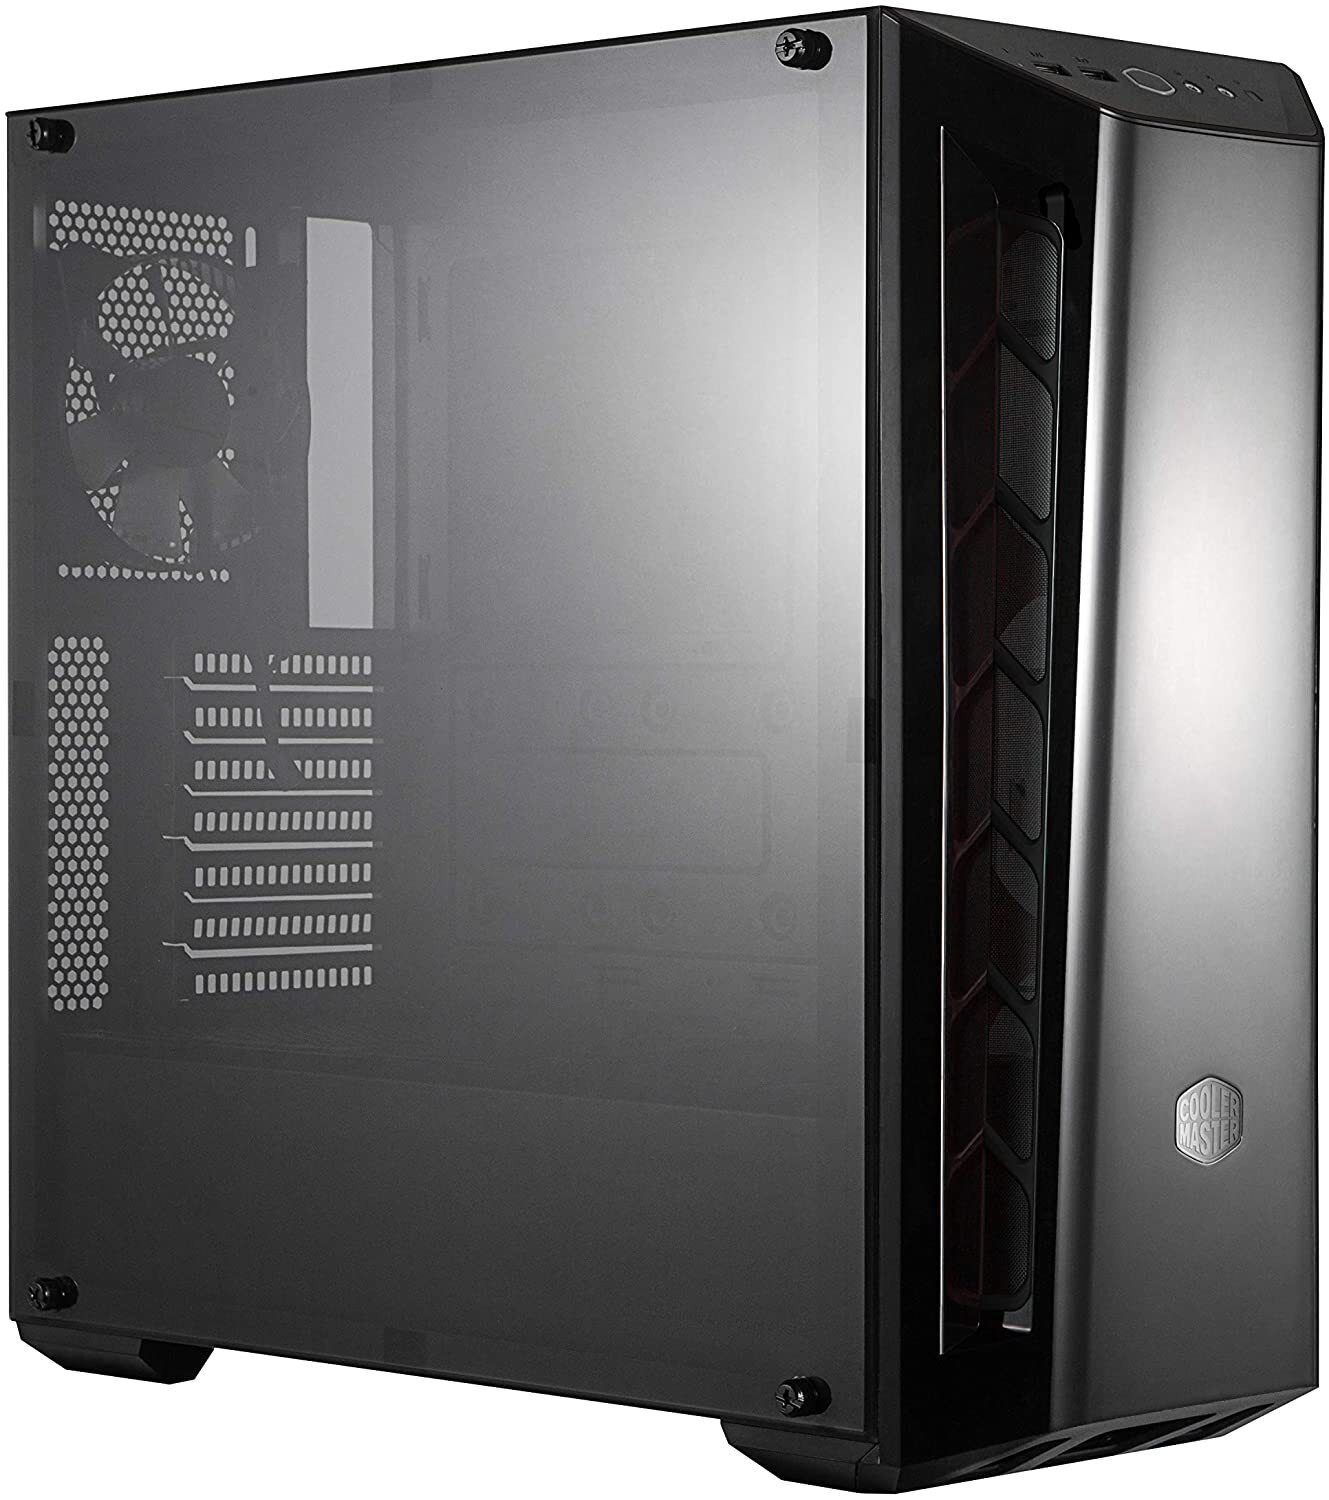 Buy Cooler Master MasterBox MB520 Computer Case - Black online in ...